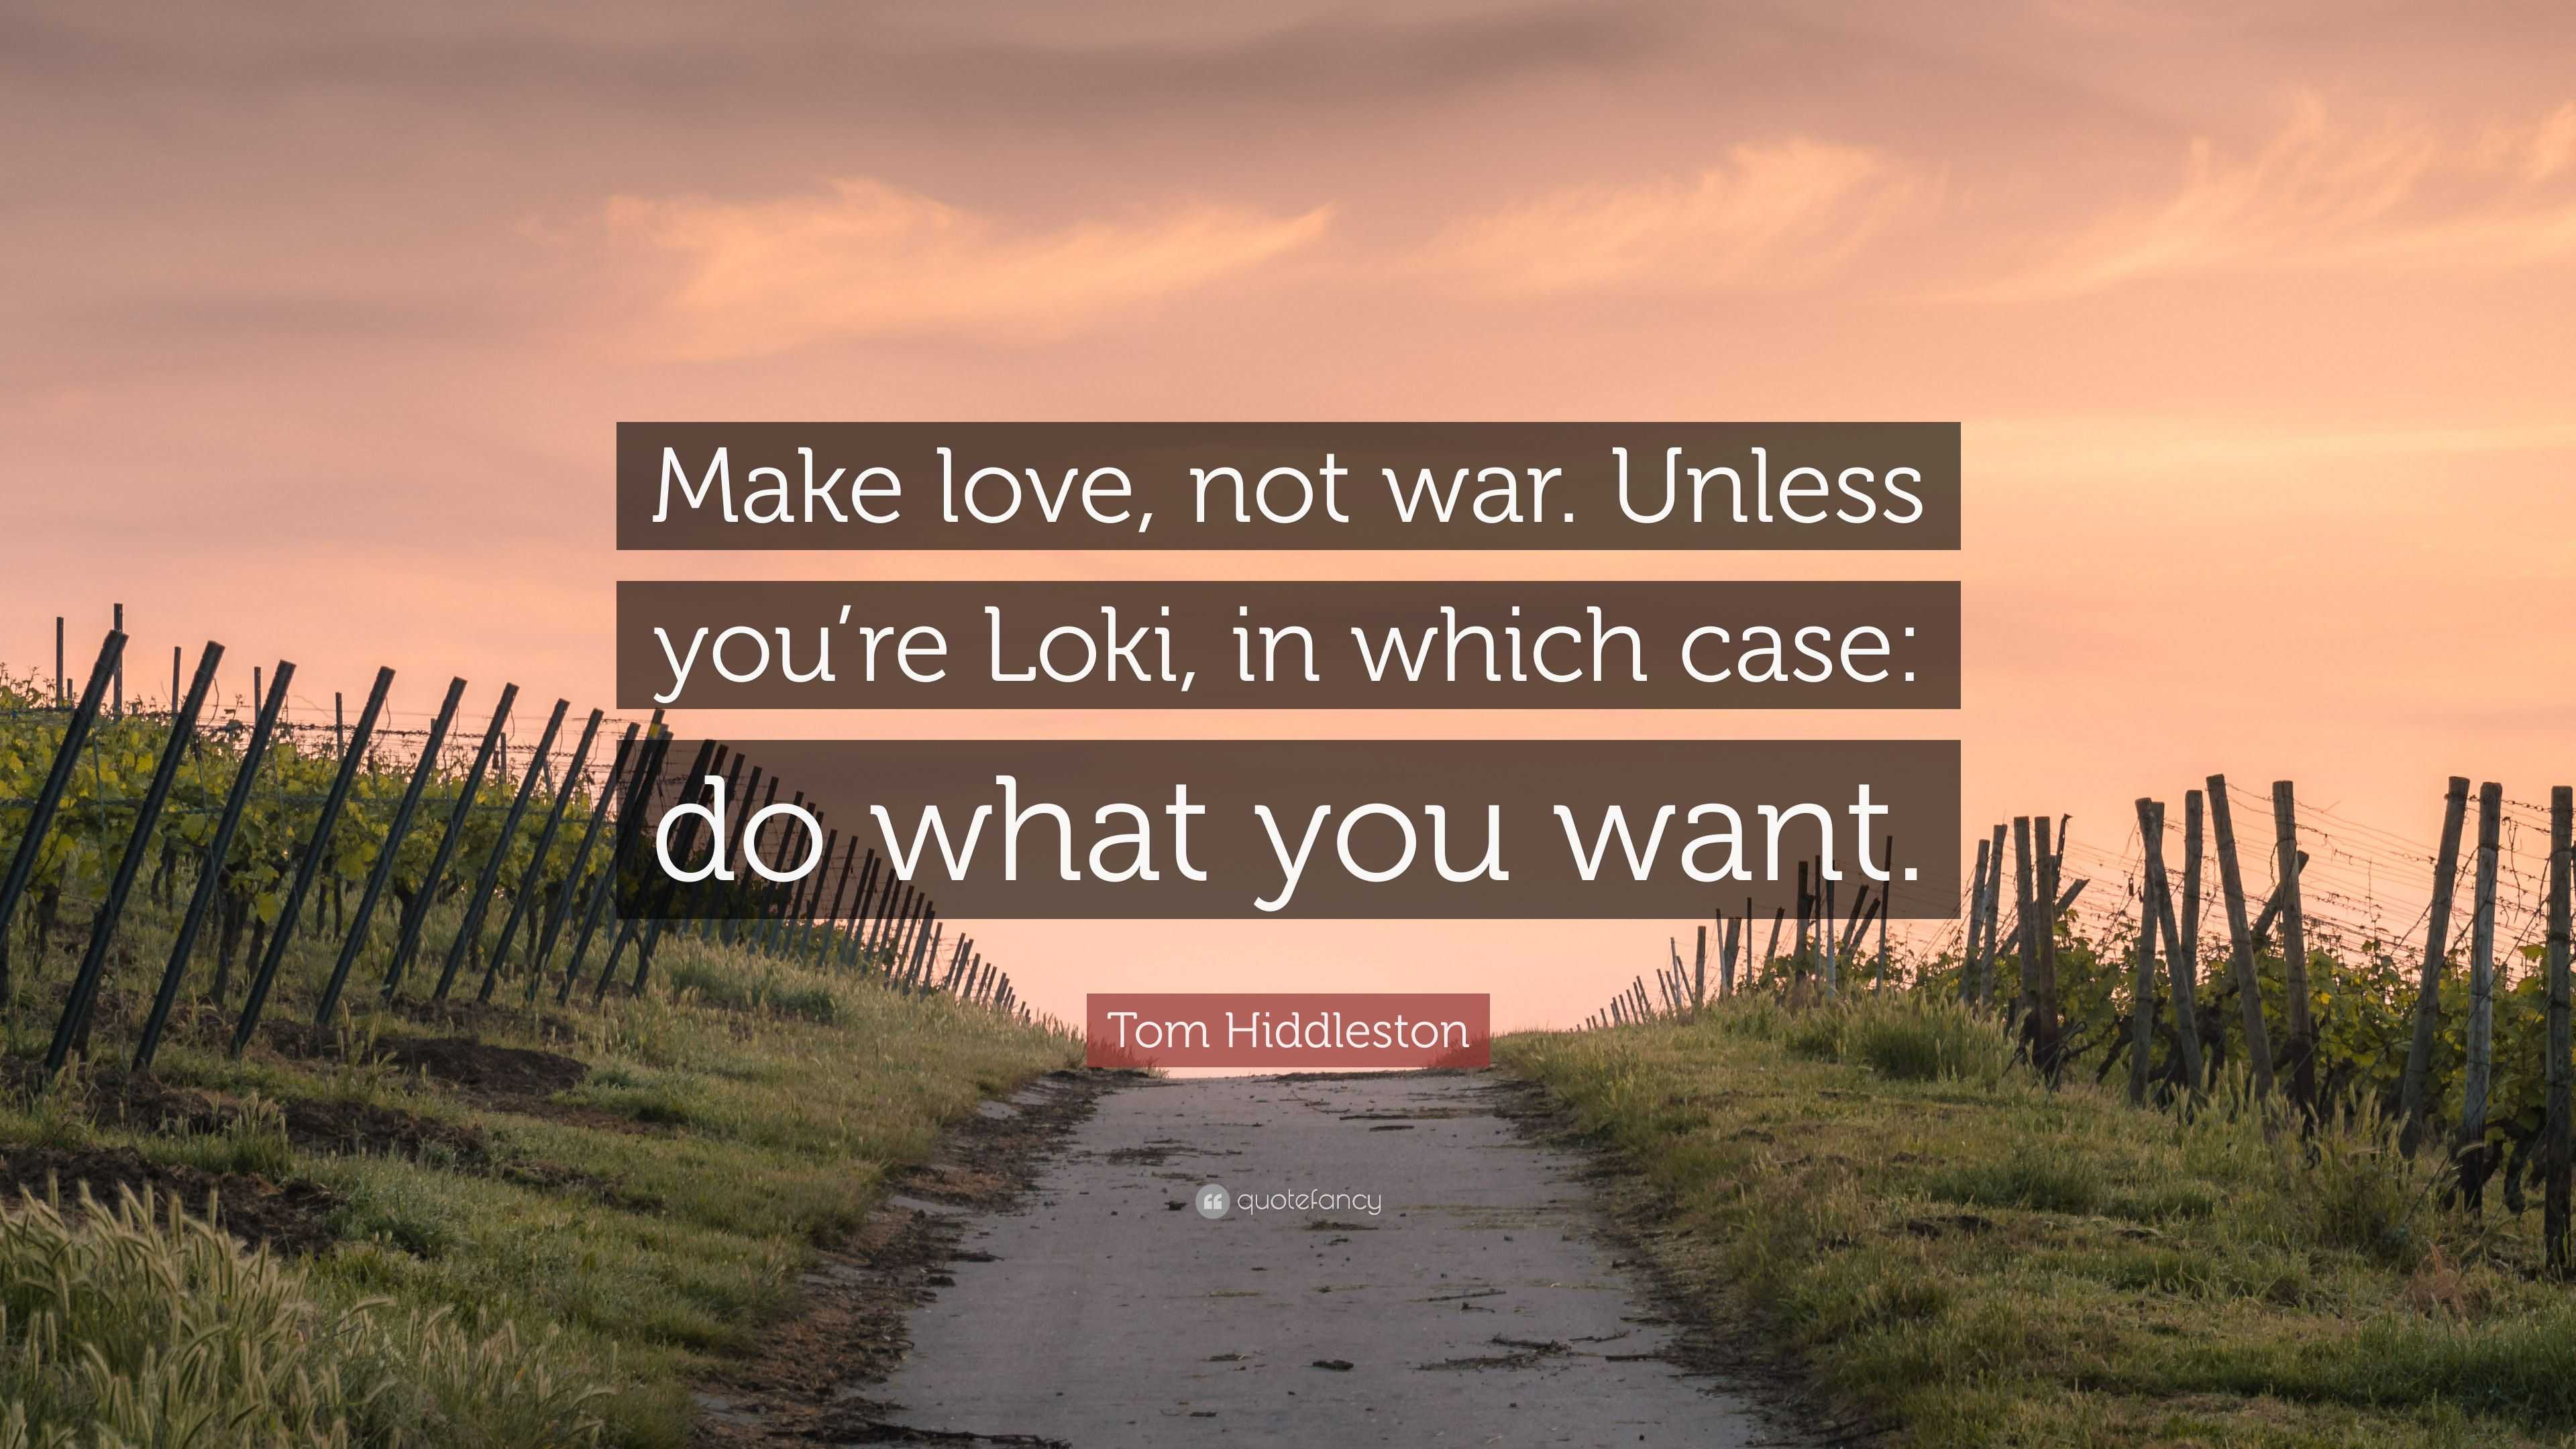 Tom Hiddleston Quote “Make love not war Unless you re Loki